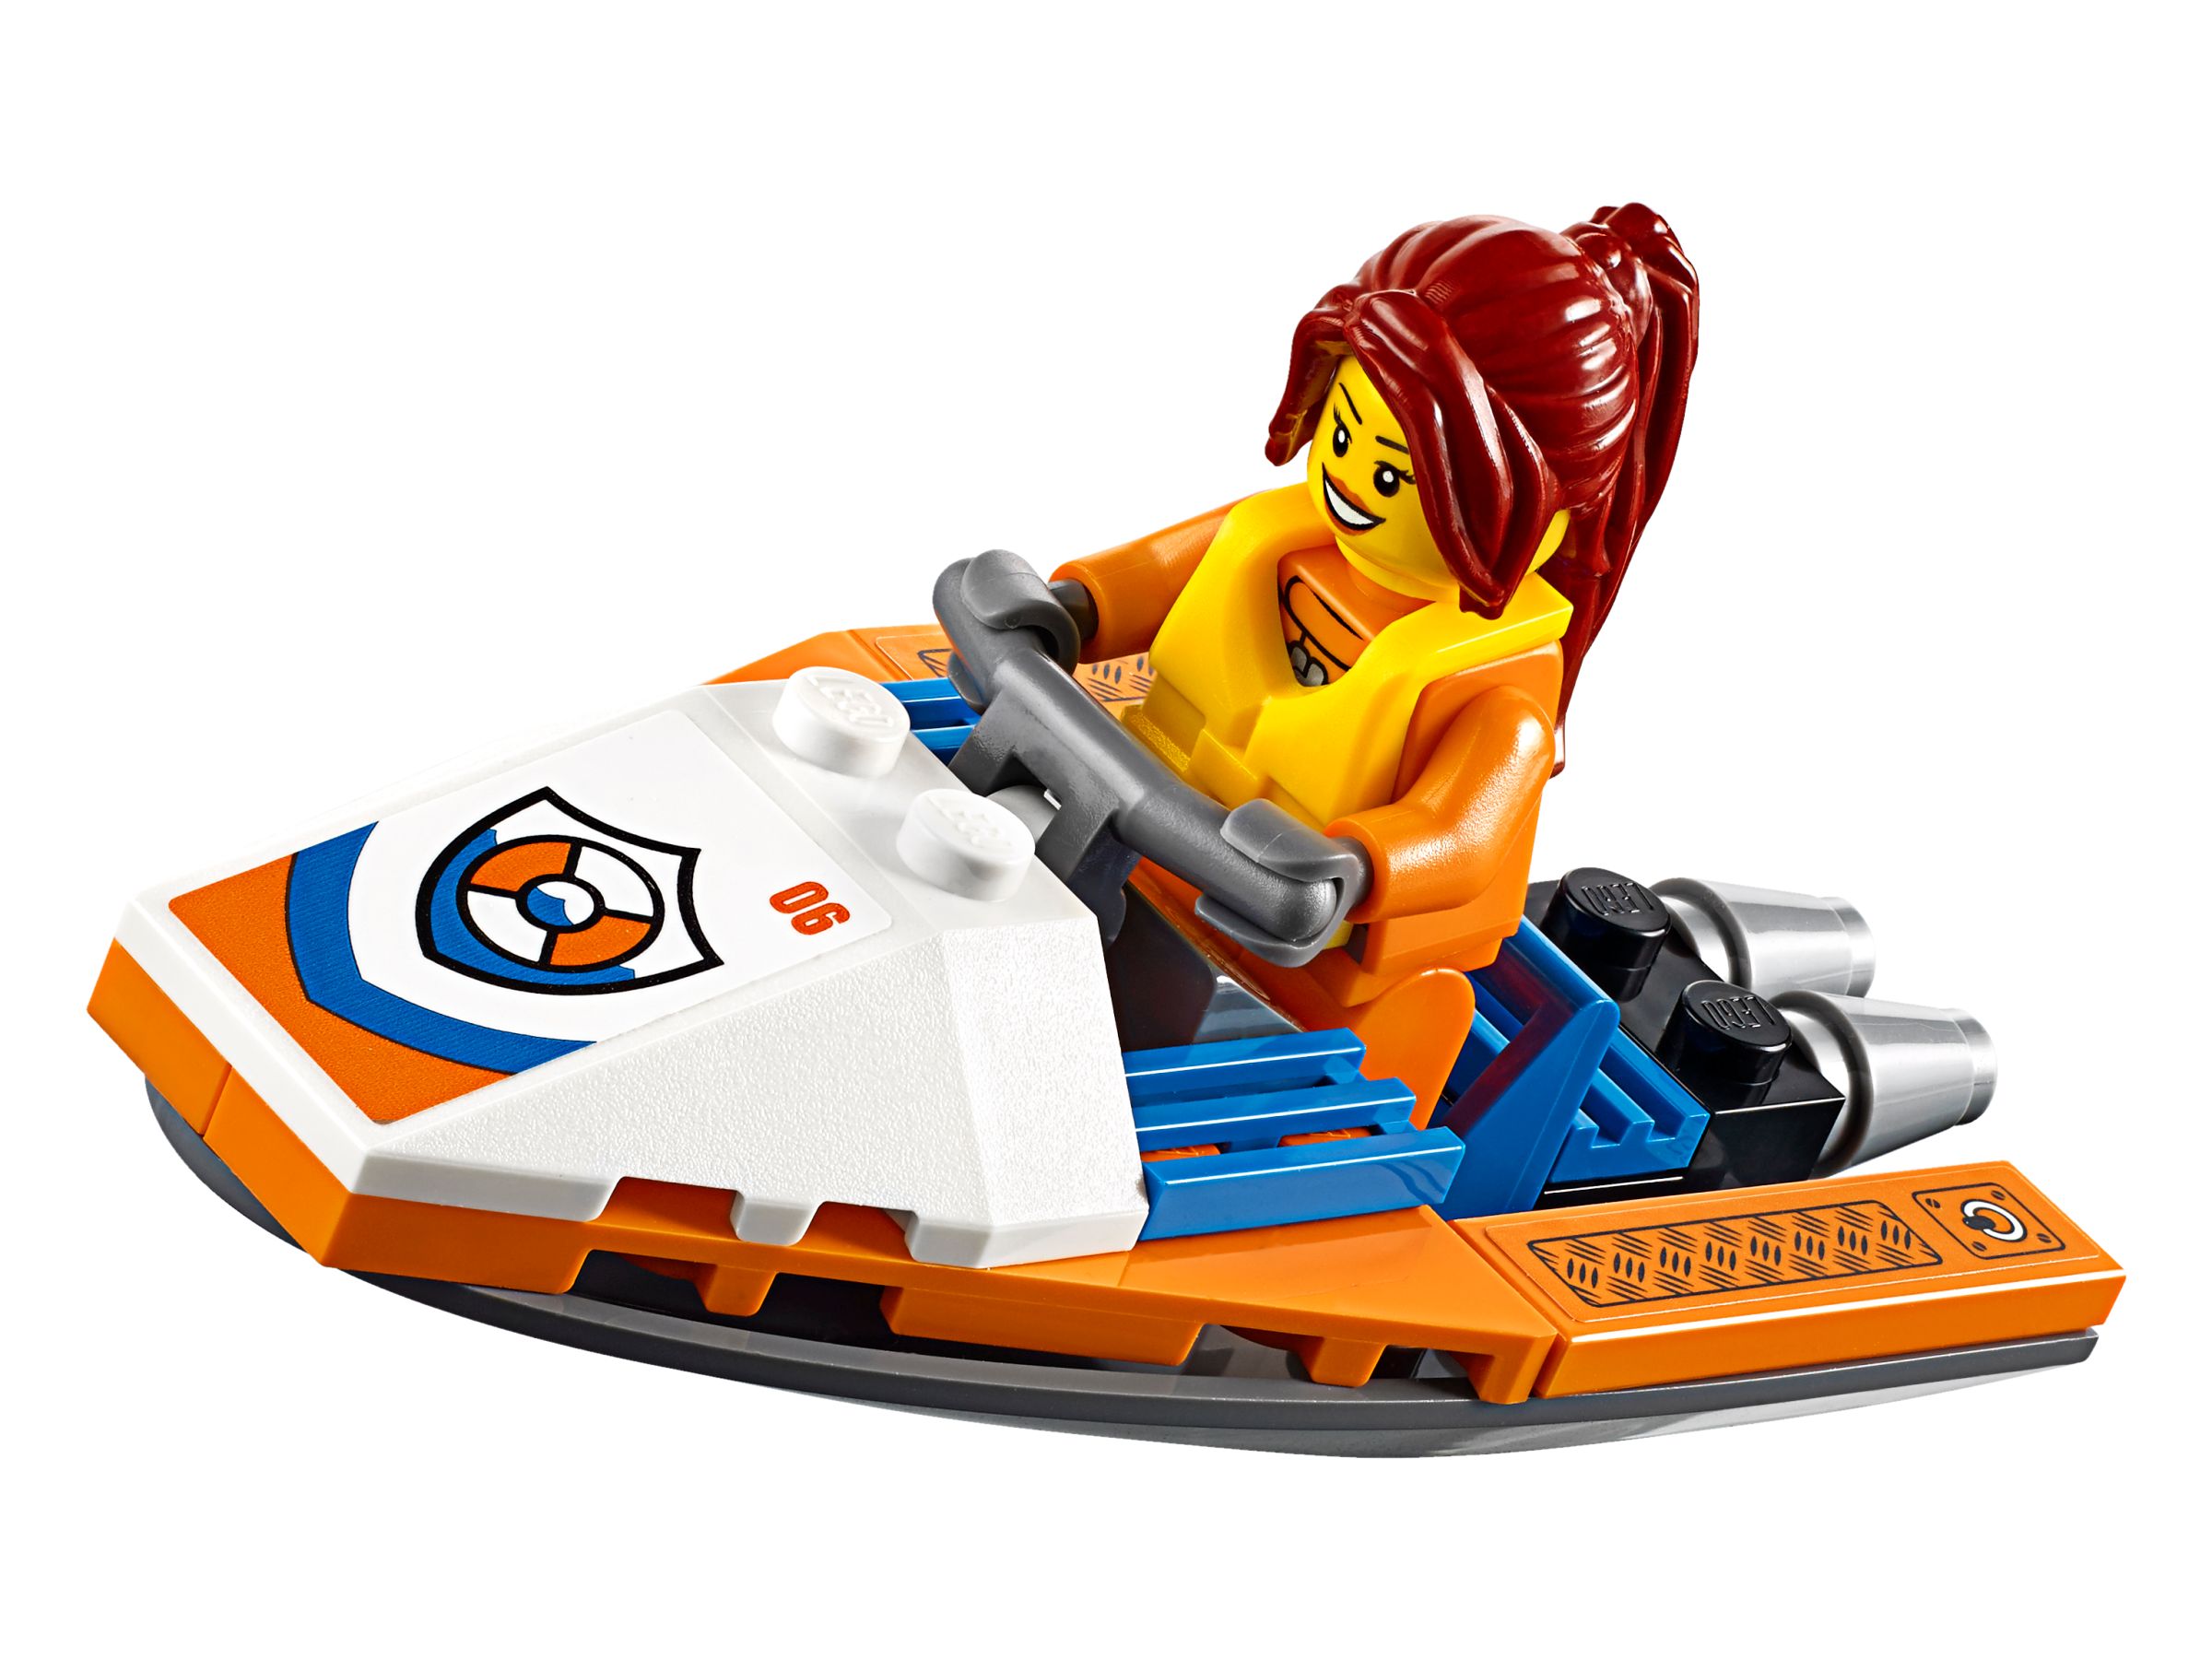 LEGO City 60166 Seenot-Rettungshubschrauber LEGO_60166_alt4.jpg